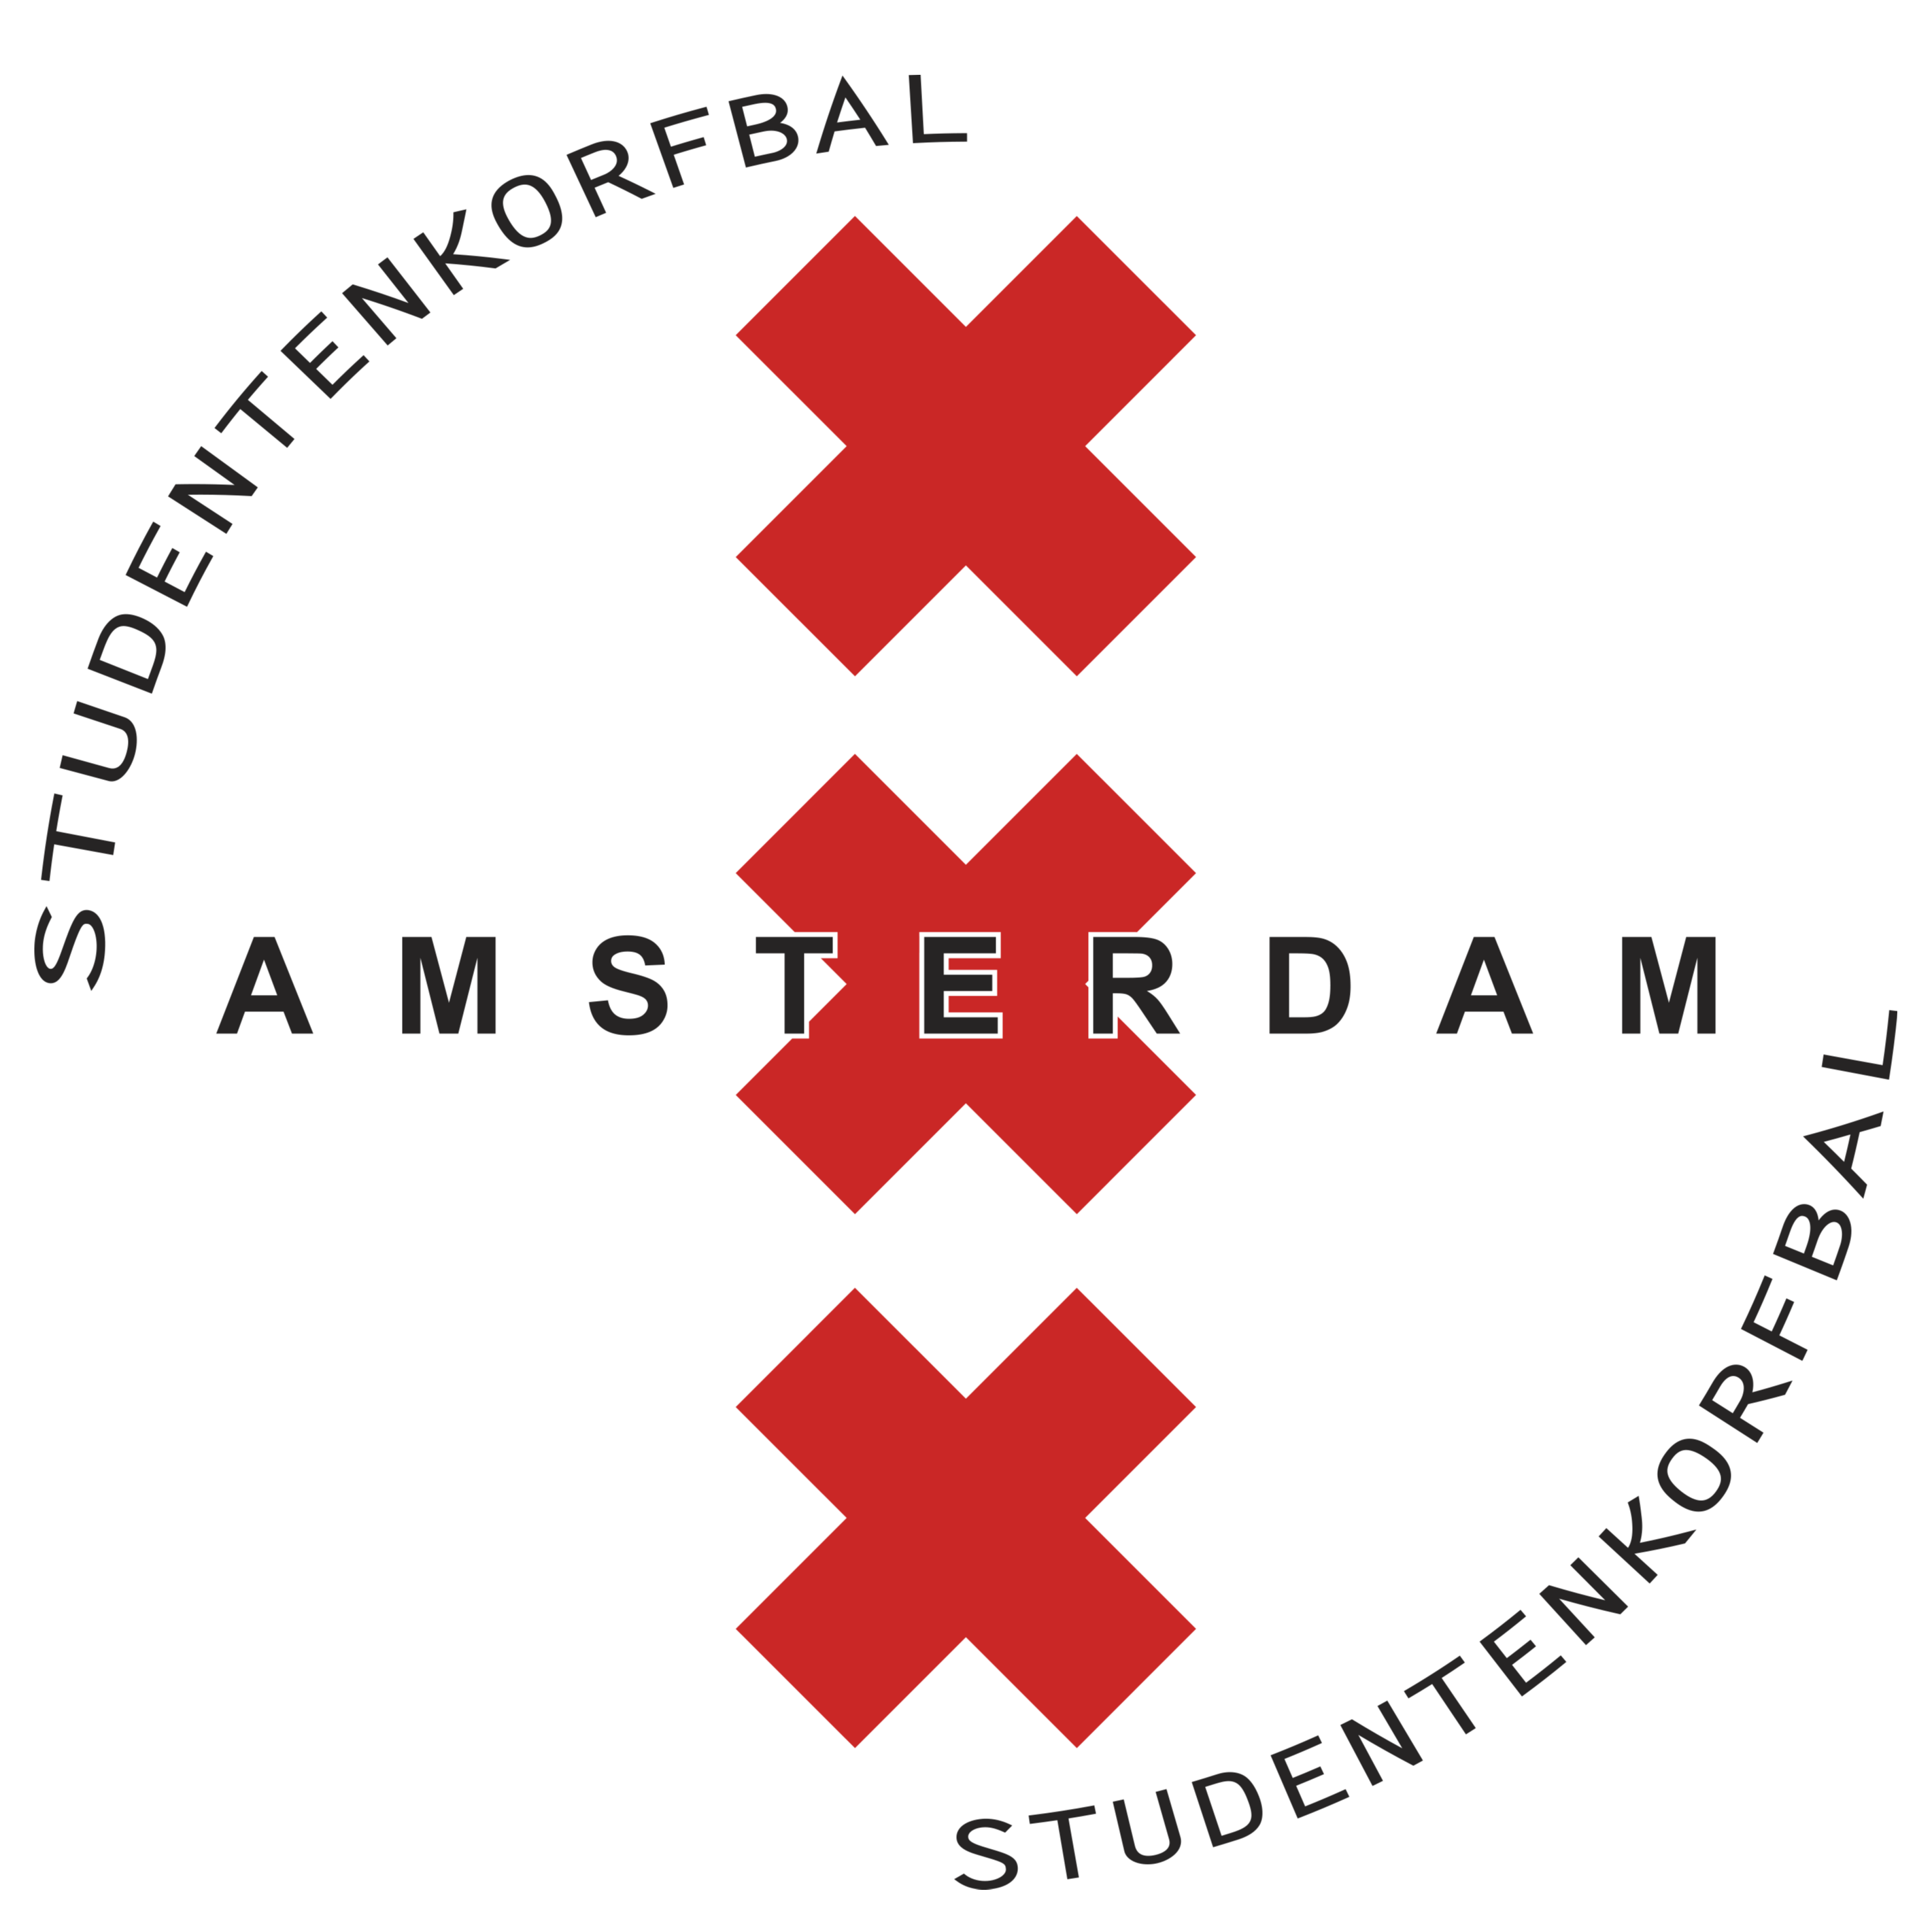 Studenten Korfbal Vereniging Amsterdam